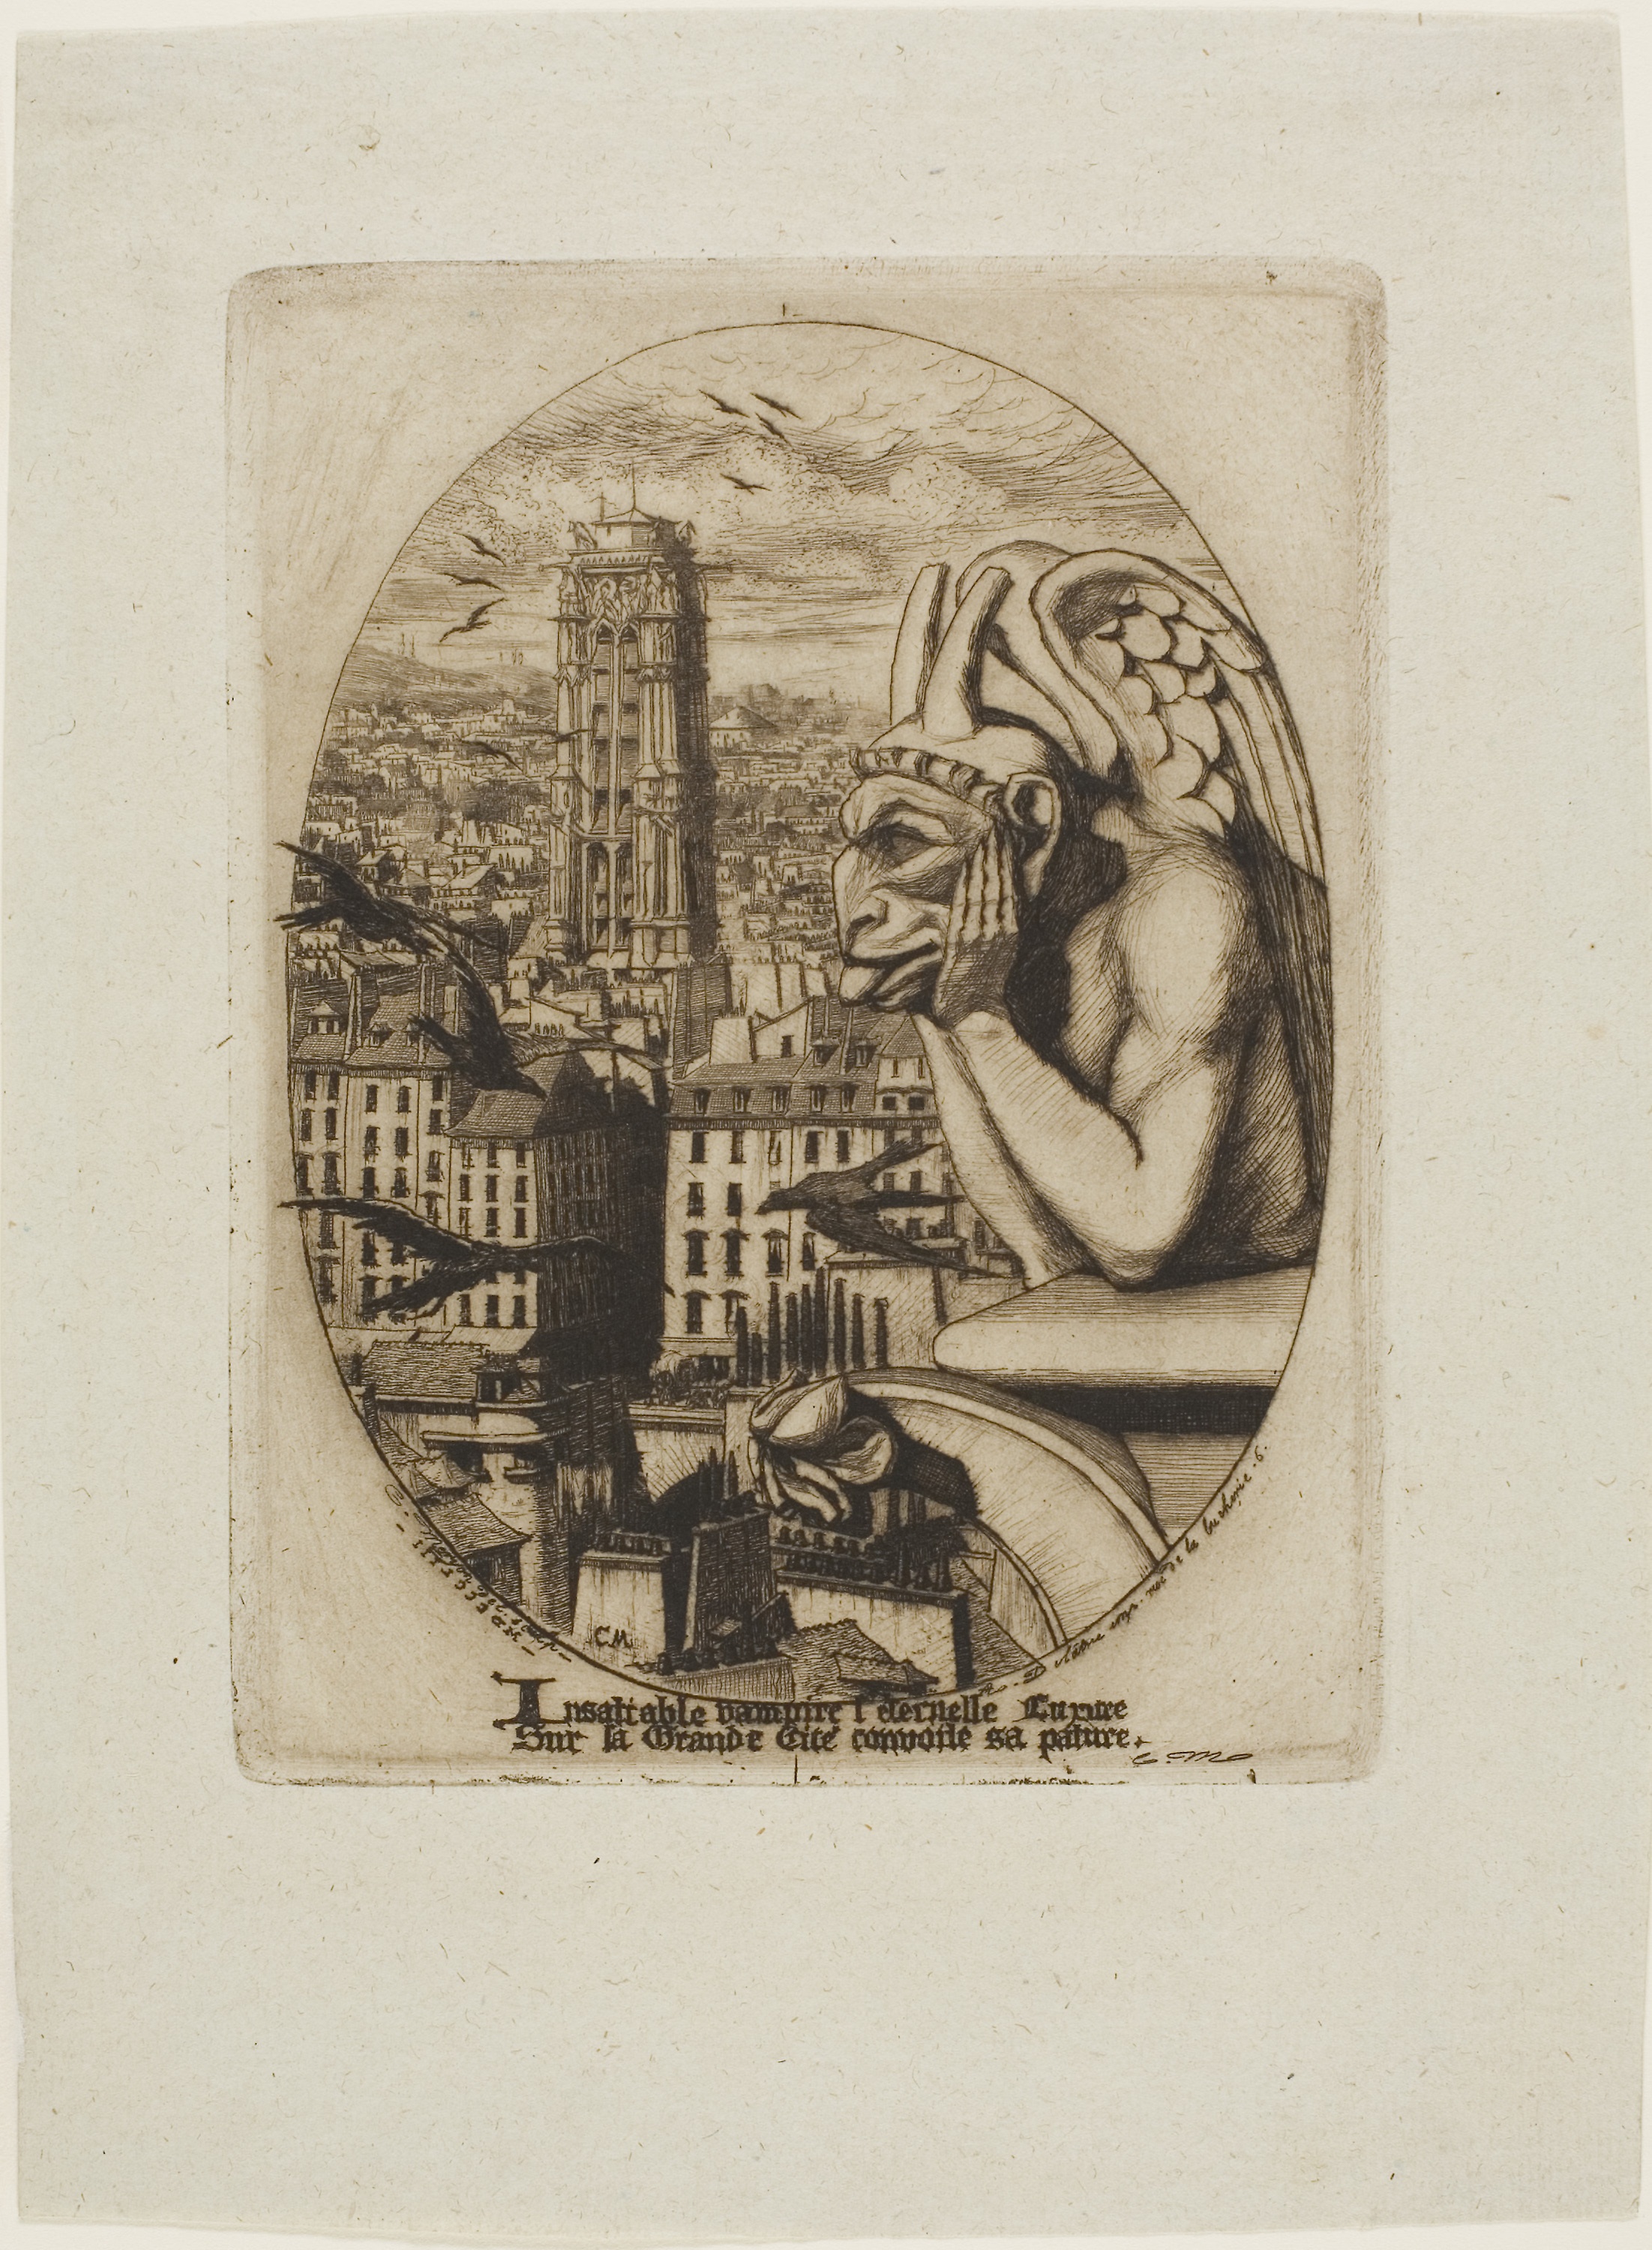 Le Stryge (吸血鬼) by Charles Méryon - 1853 - 15.5 x 11.5 cm 